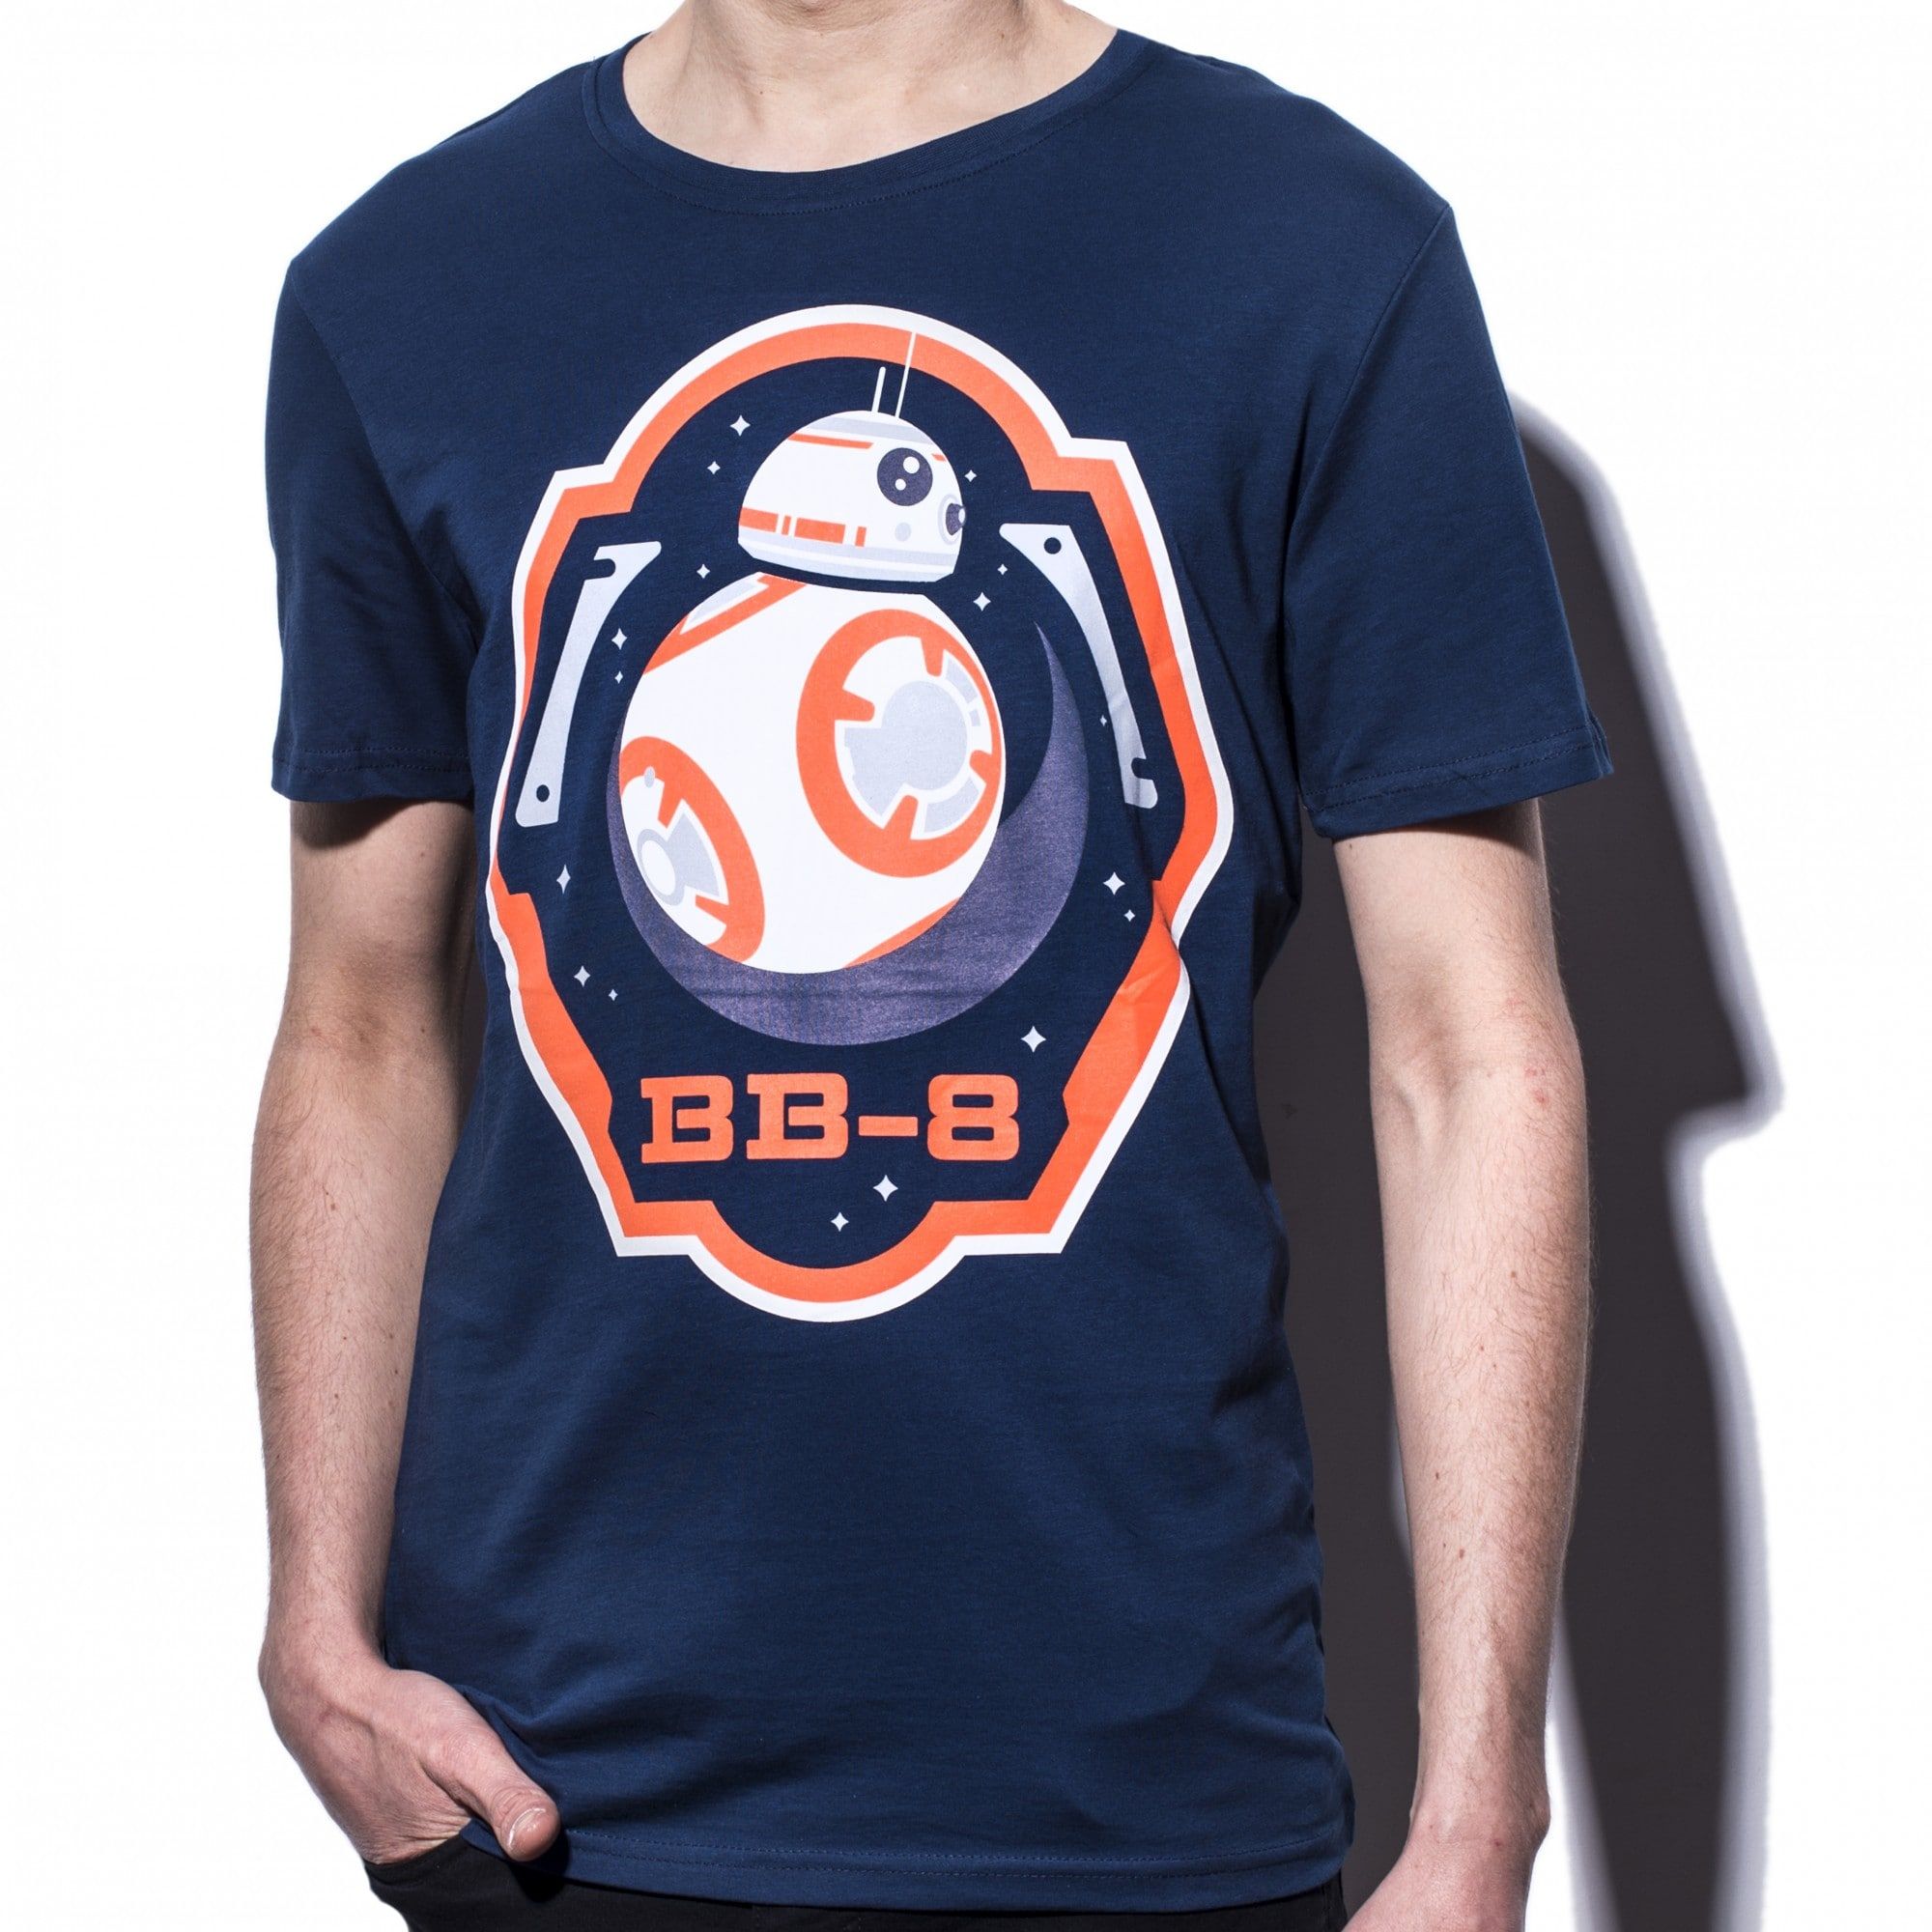 Star Wars - The Force Awakens BB-8 and Stars Blue T-Shirt - M